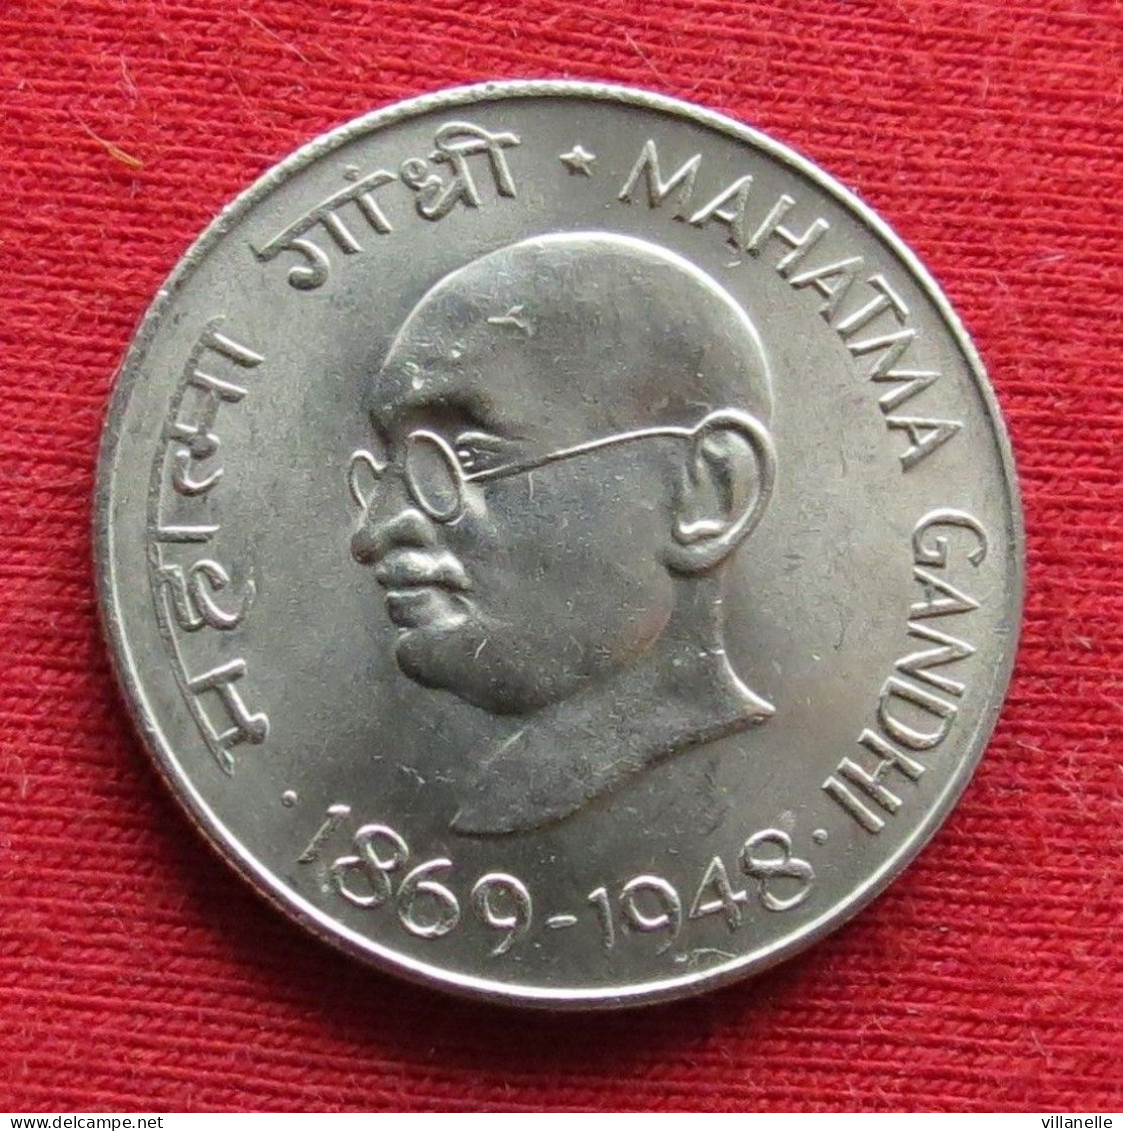 India 50 Paise 1969 B KM# 59  *VT Mahatma Gandhi 1869 - 1948 Inde Indien Indies Indes - Inde